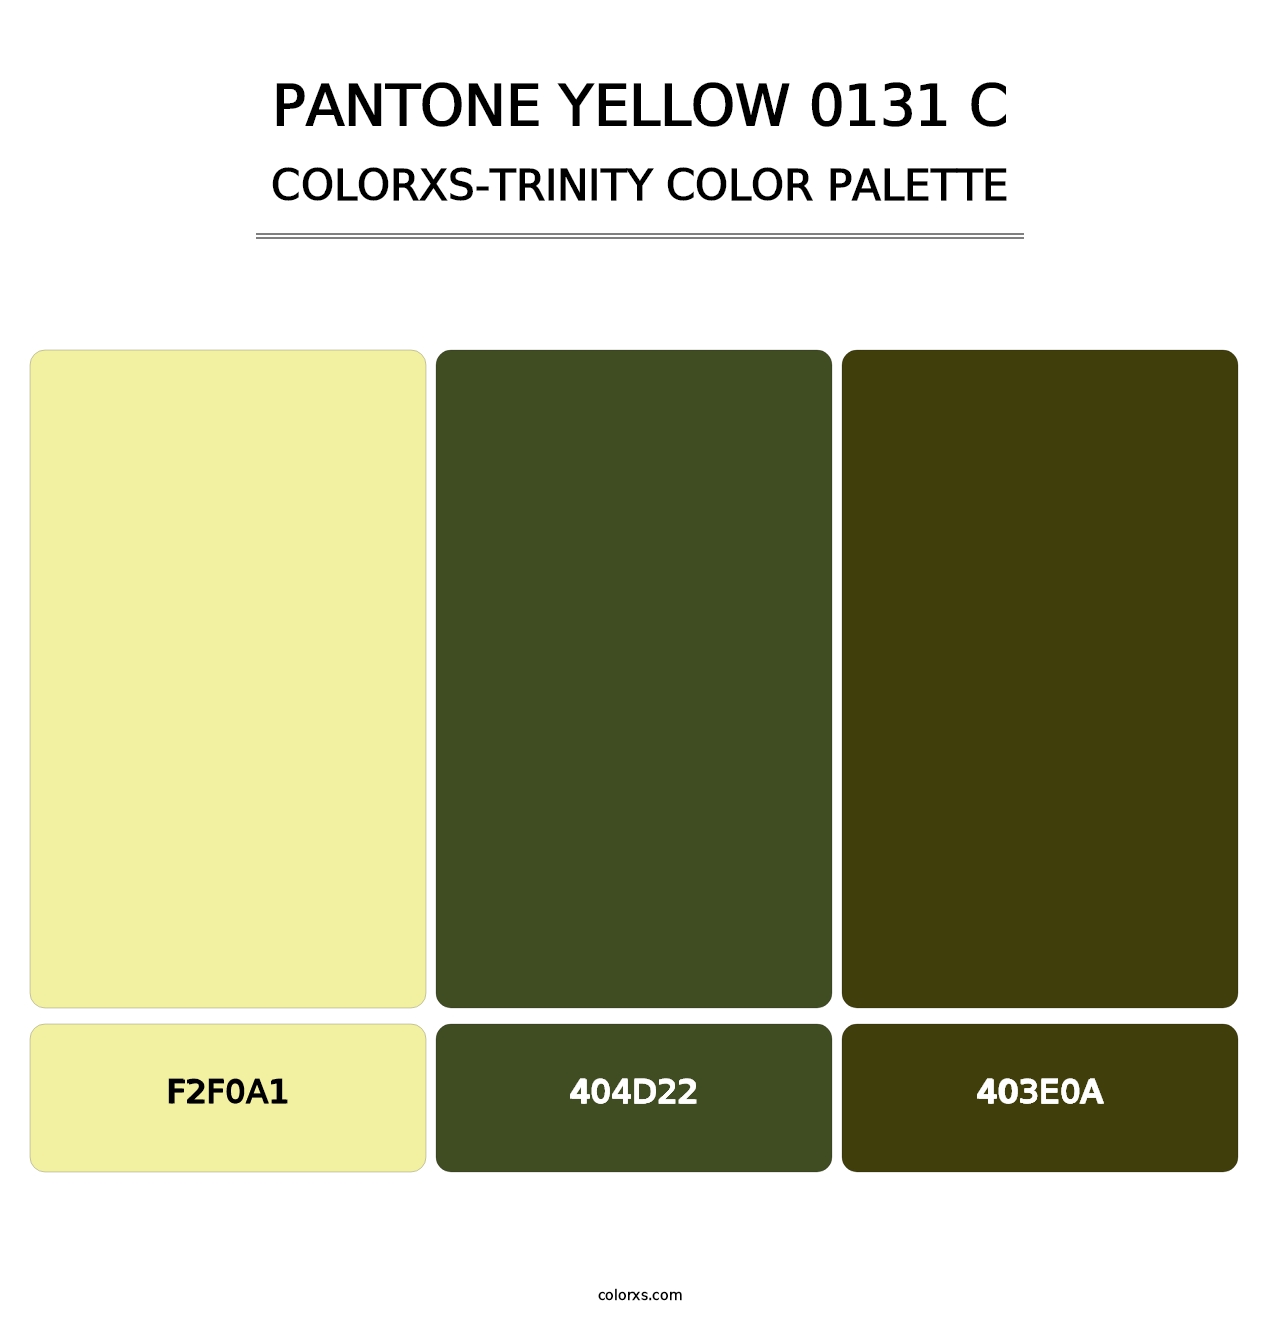 PANTONE Yellow 0131 C - Colorxs Trinity Palette